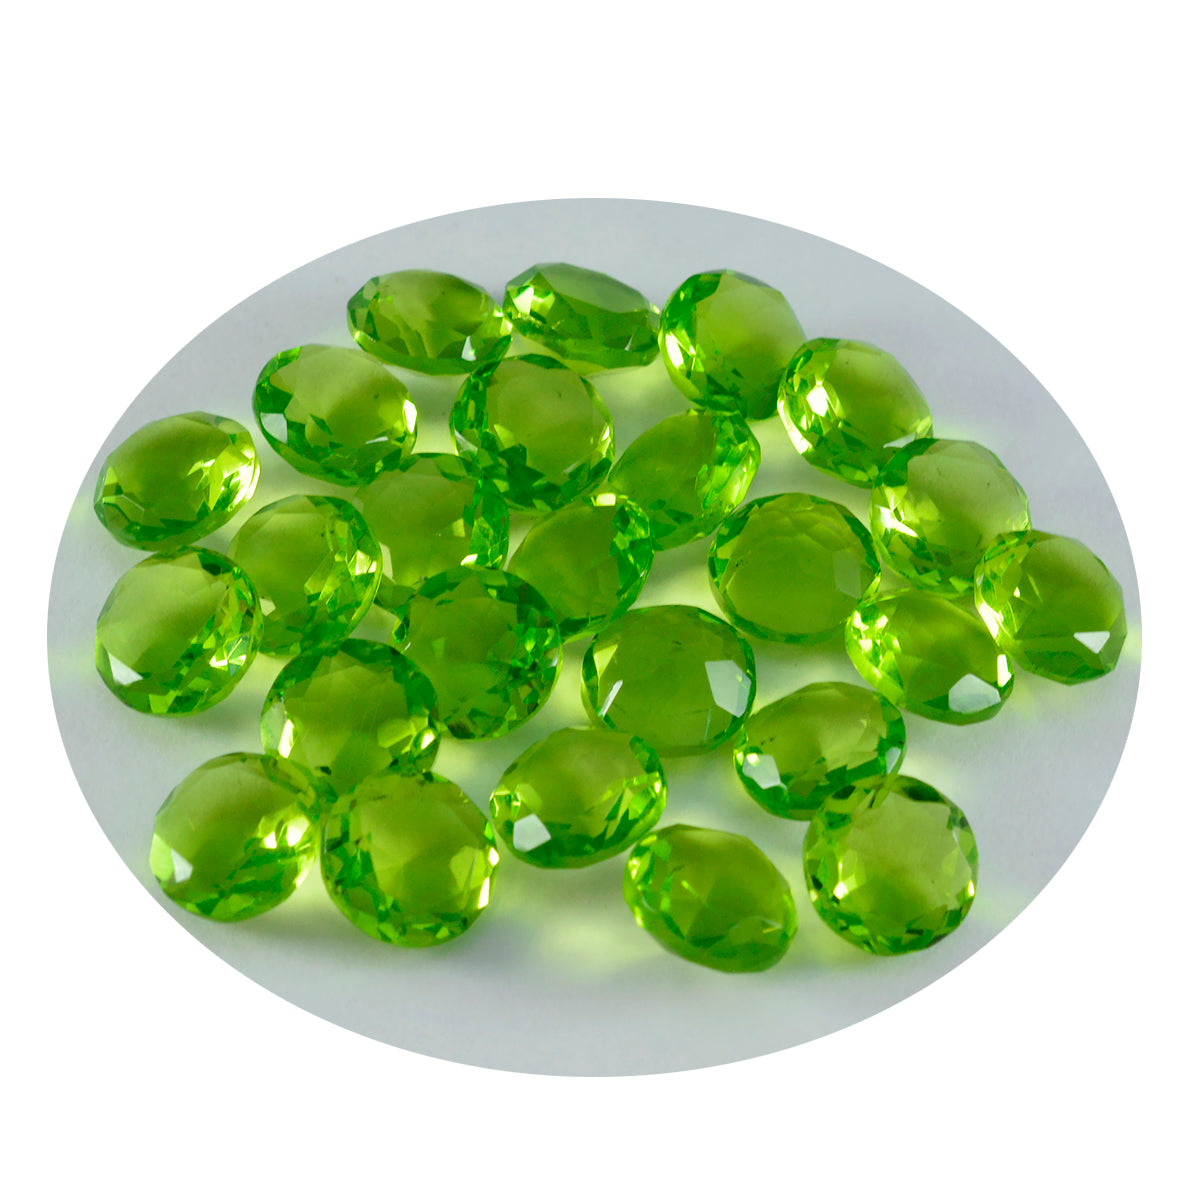 Riyogems 1PC Green Peridot CZ Faceted 6x6 mm Round Shape AAA Quality Gems